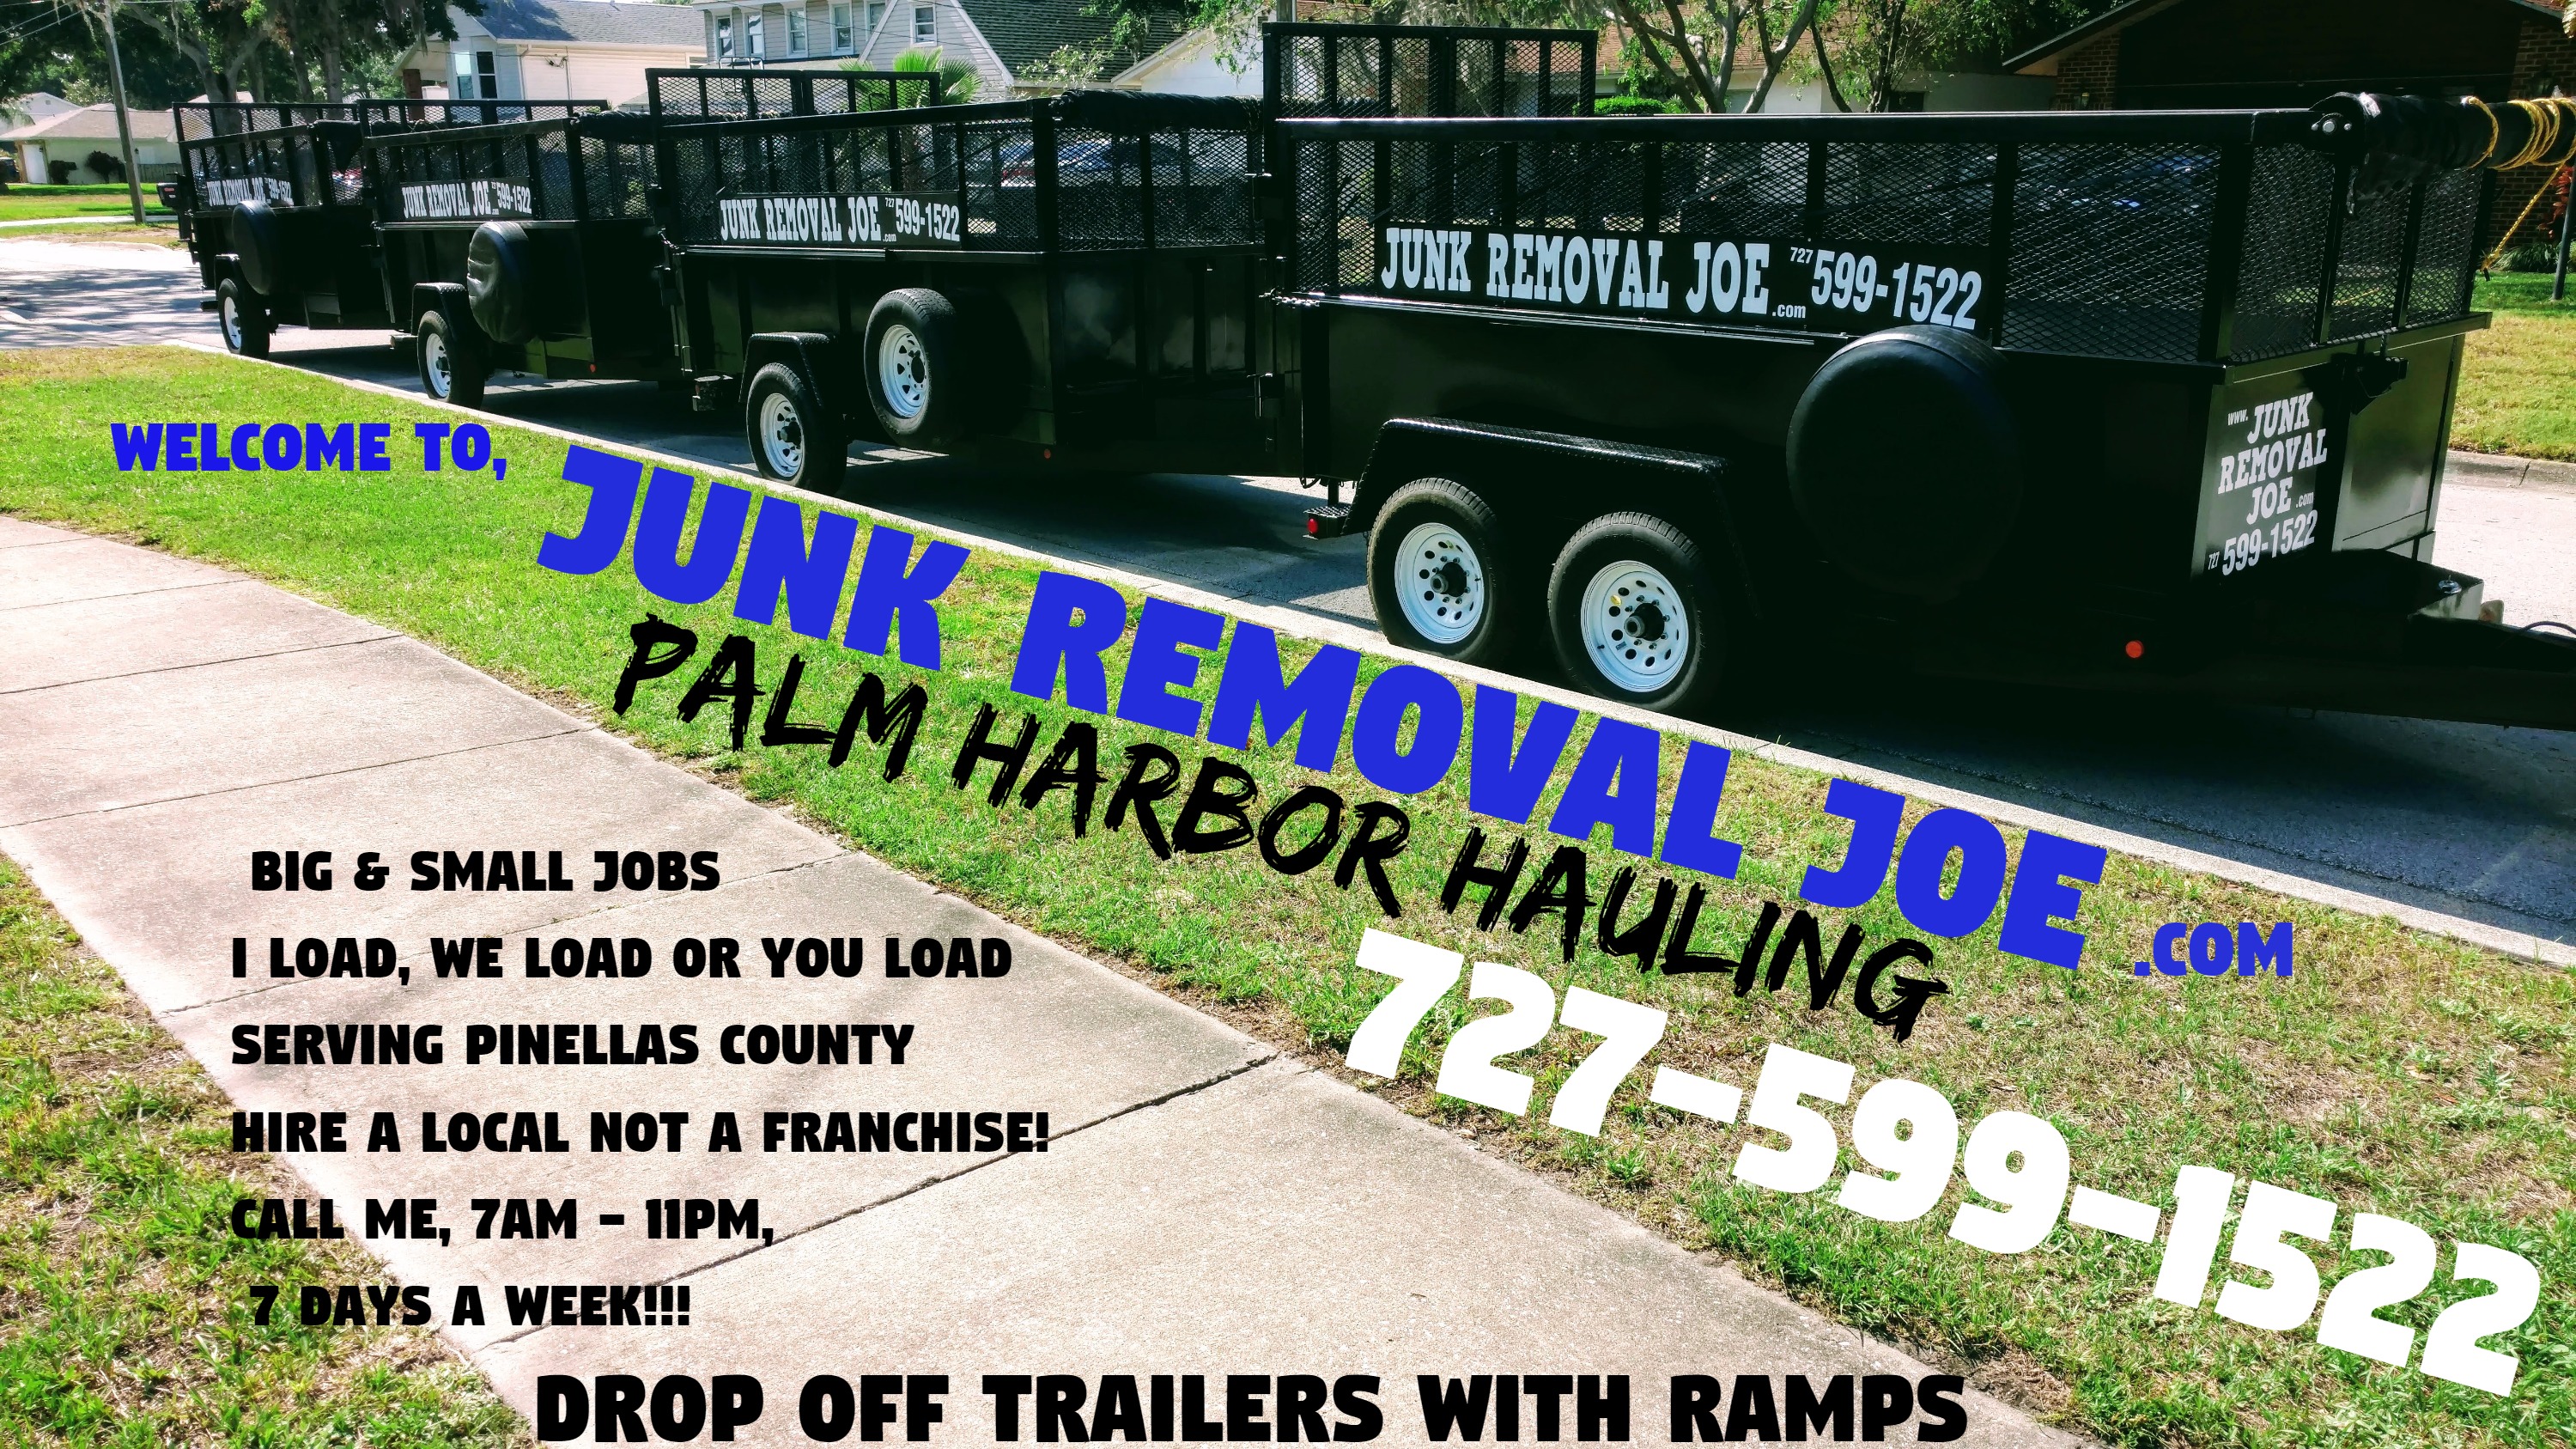 Junk Removal Joe -727-599-1522 – Palm Harbor, Florida